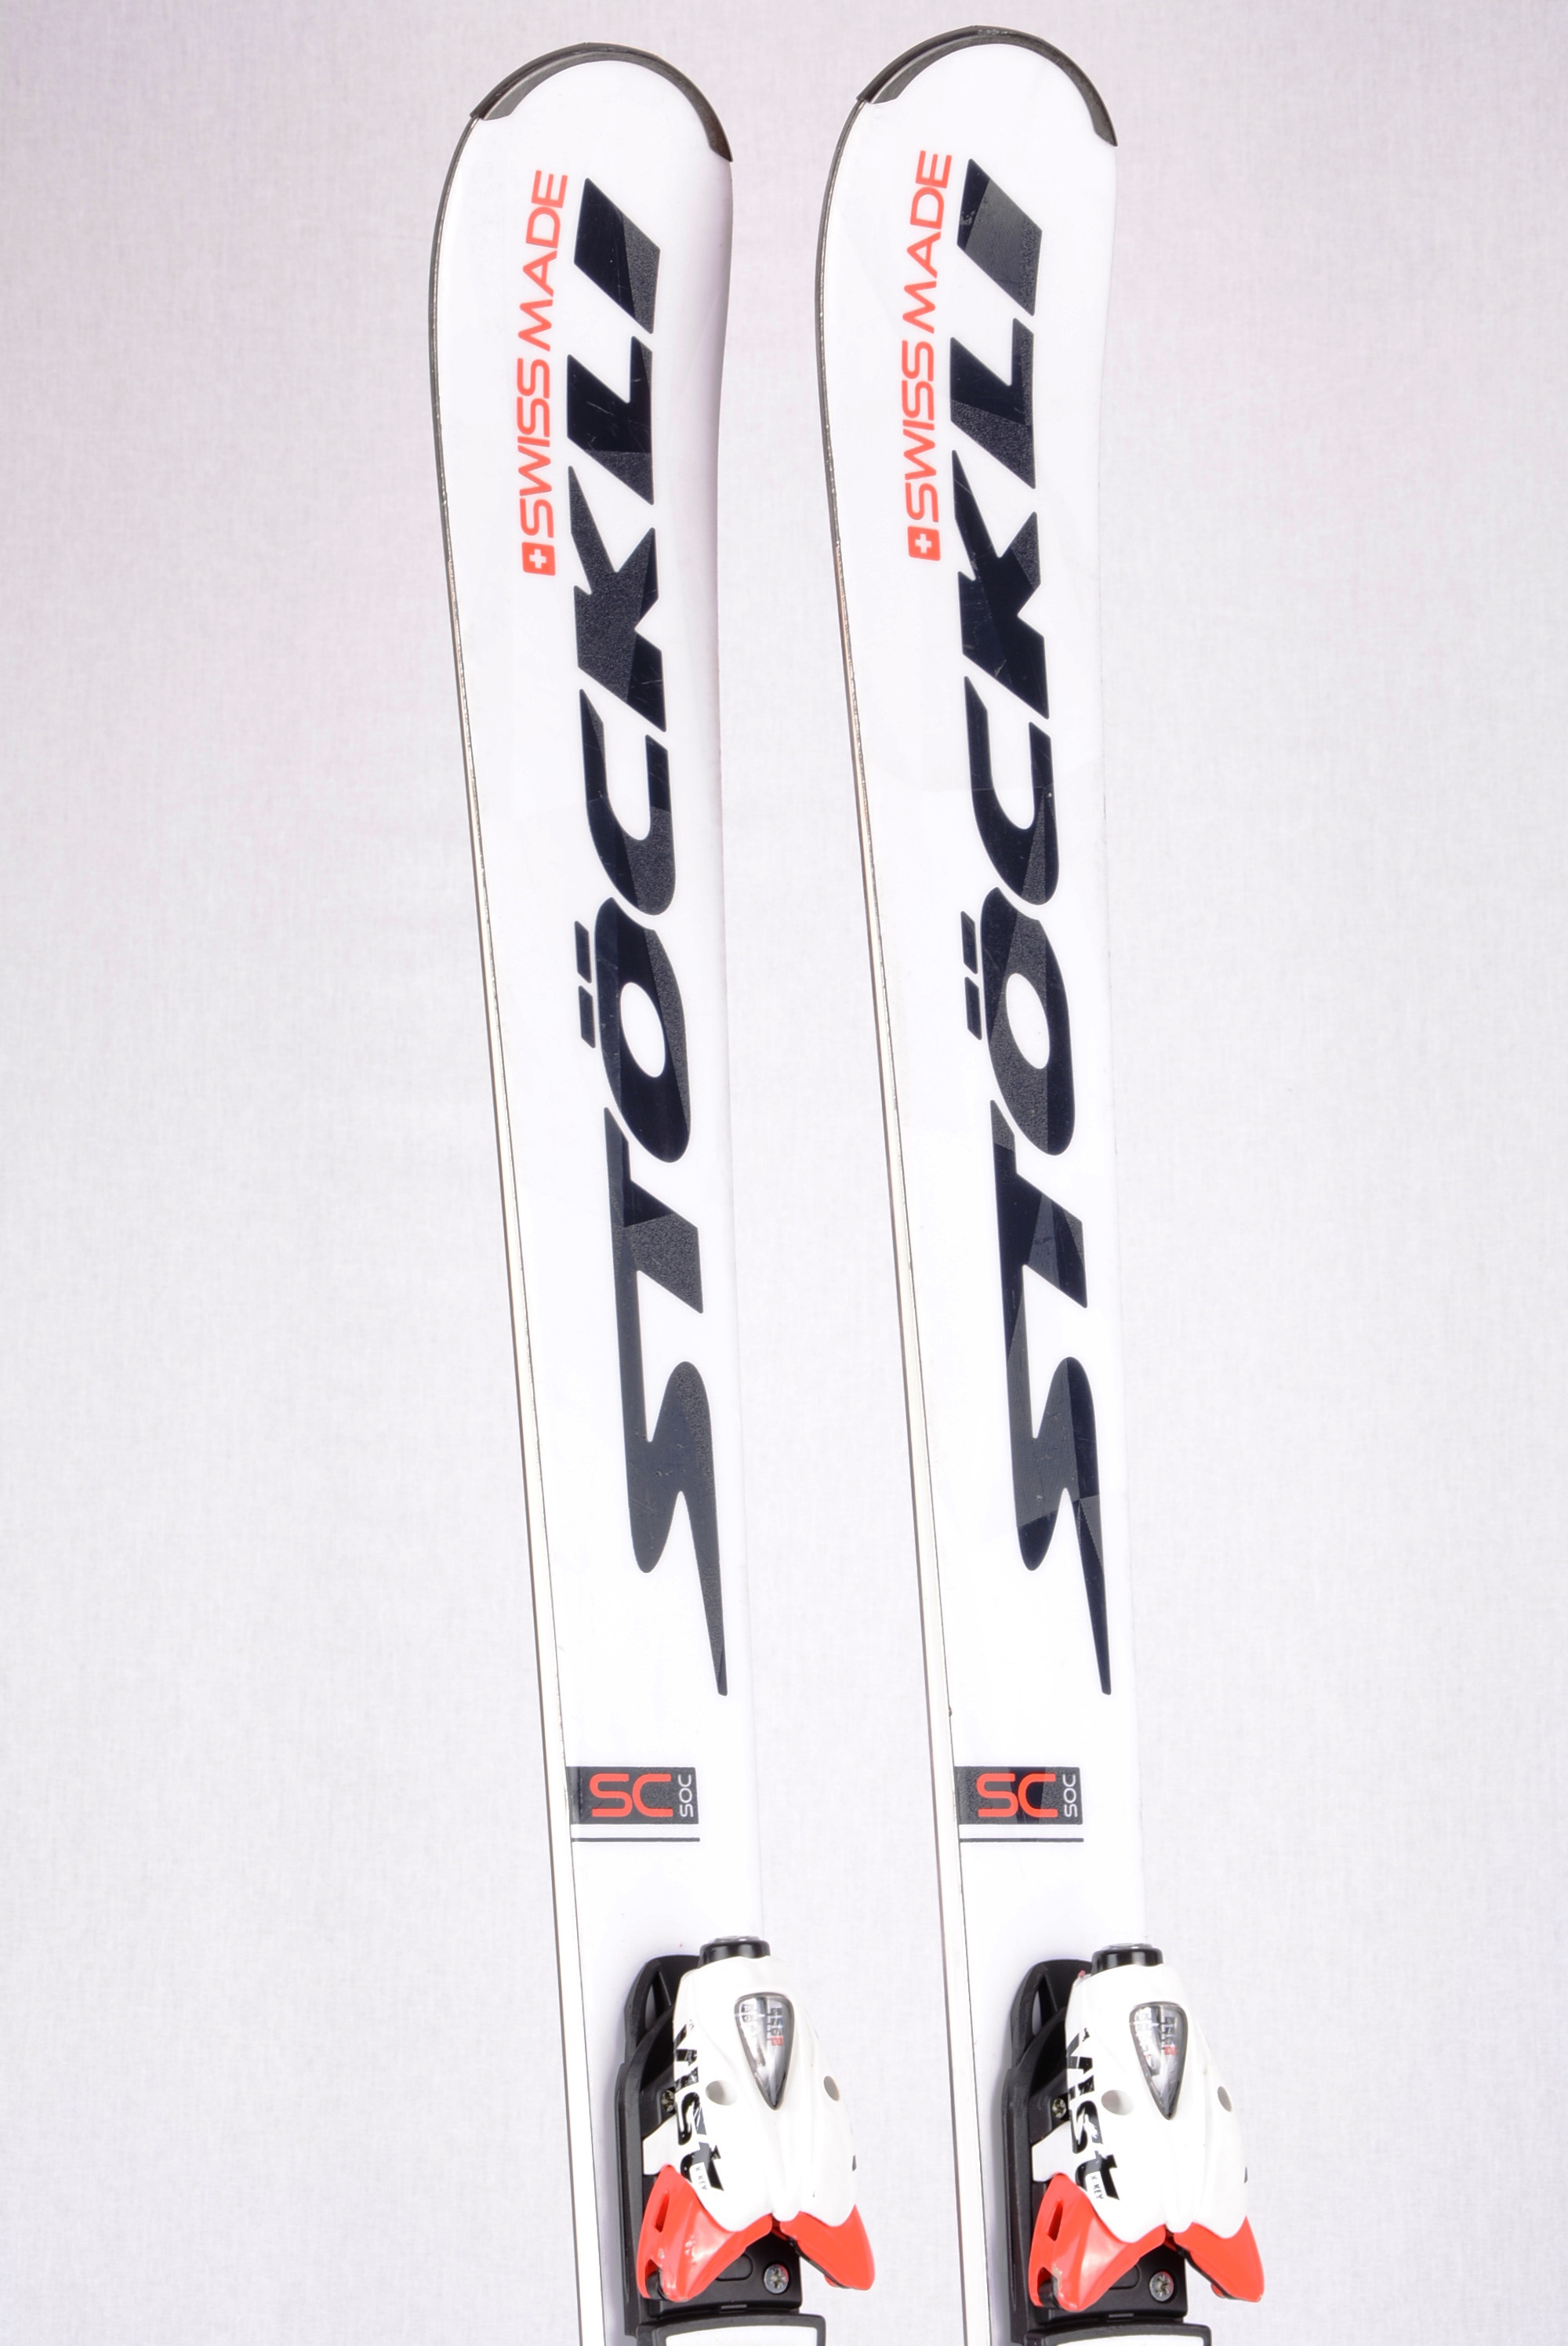 skis STOCKLI LASER SC WORLDCUP, sandwich woodcore, double titan +